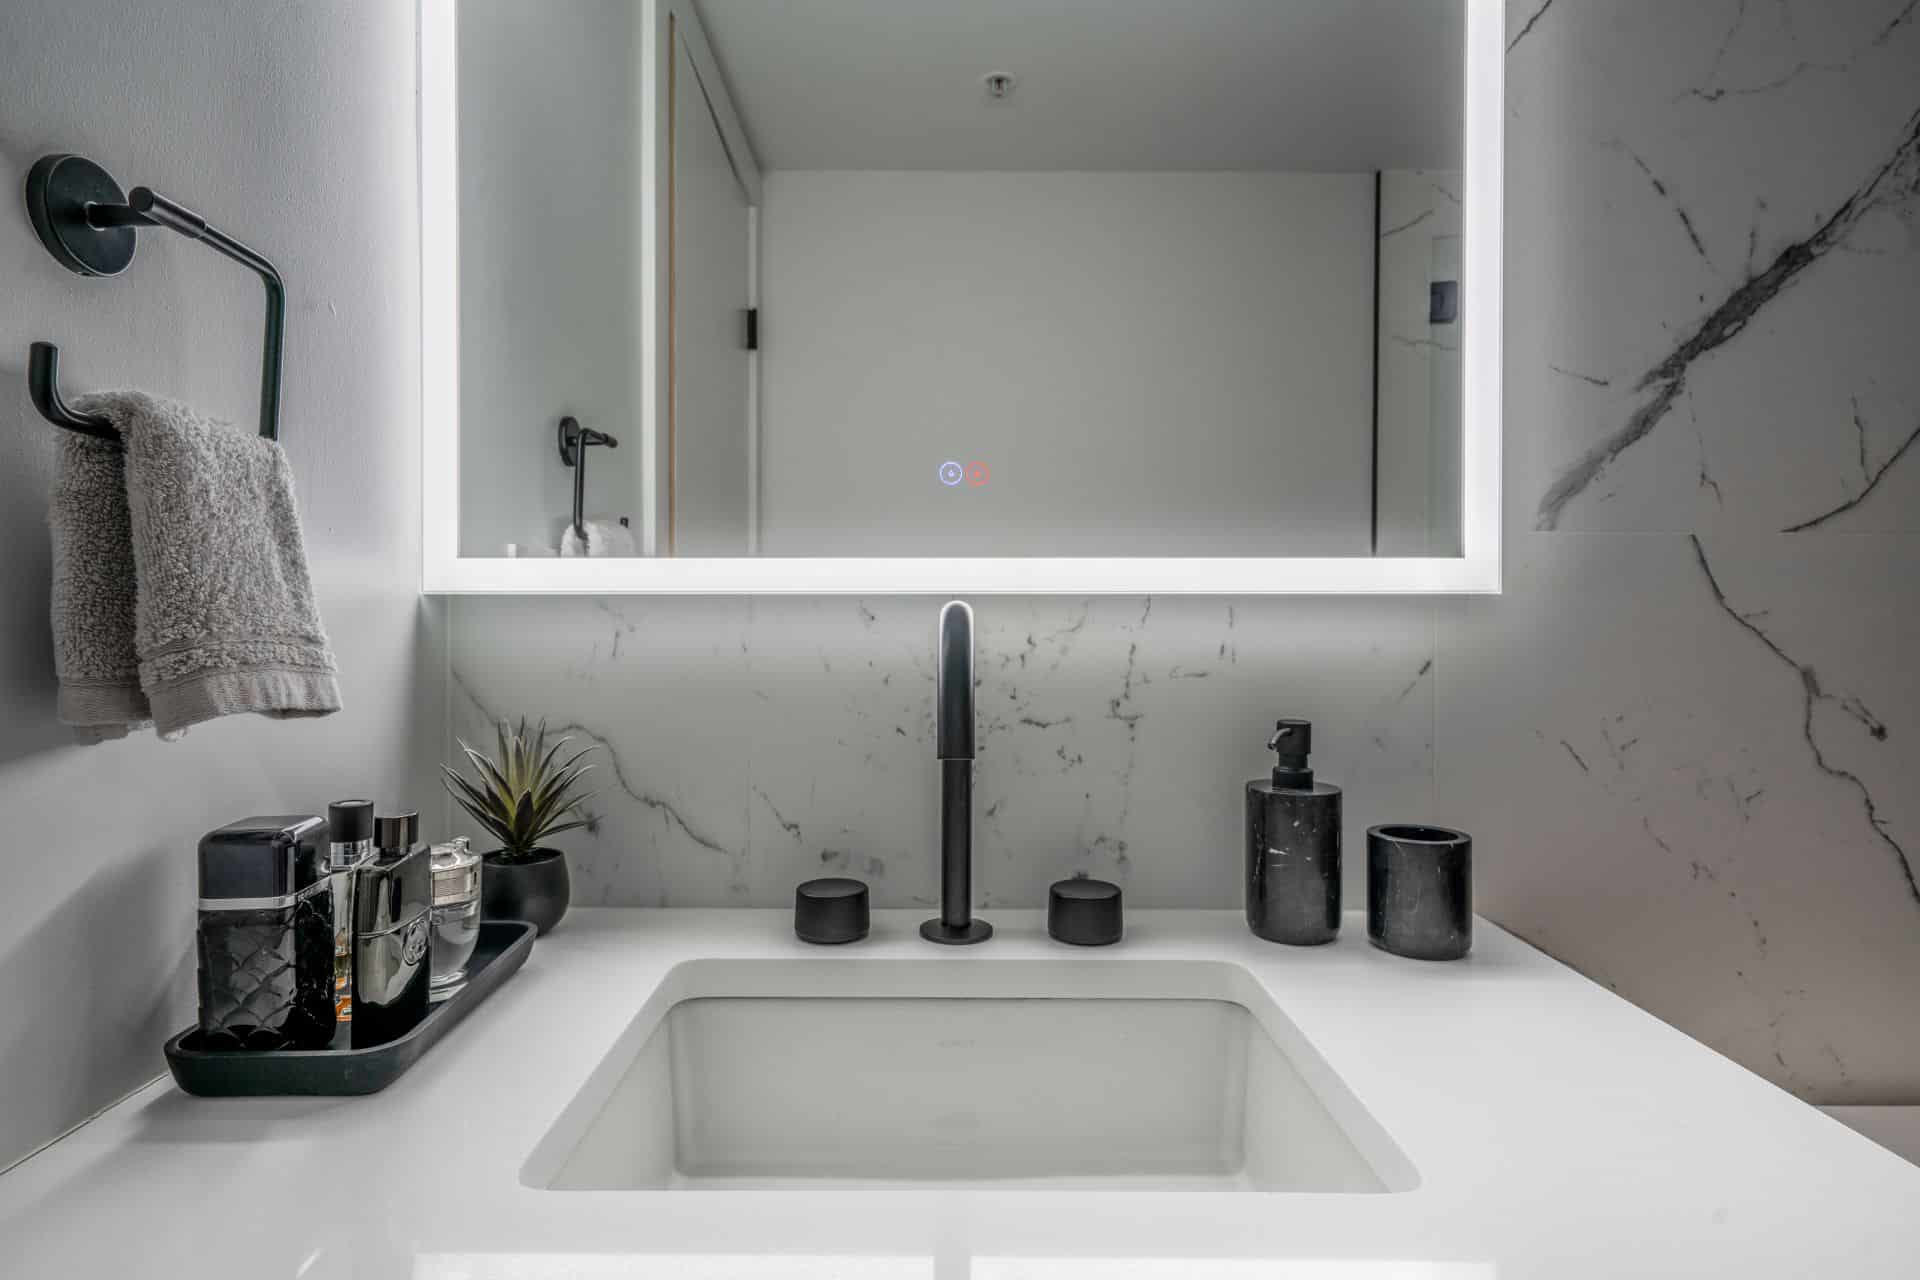 Vancouver-interior-design-bathroom-black-faucet-white-counter-marble-tile